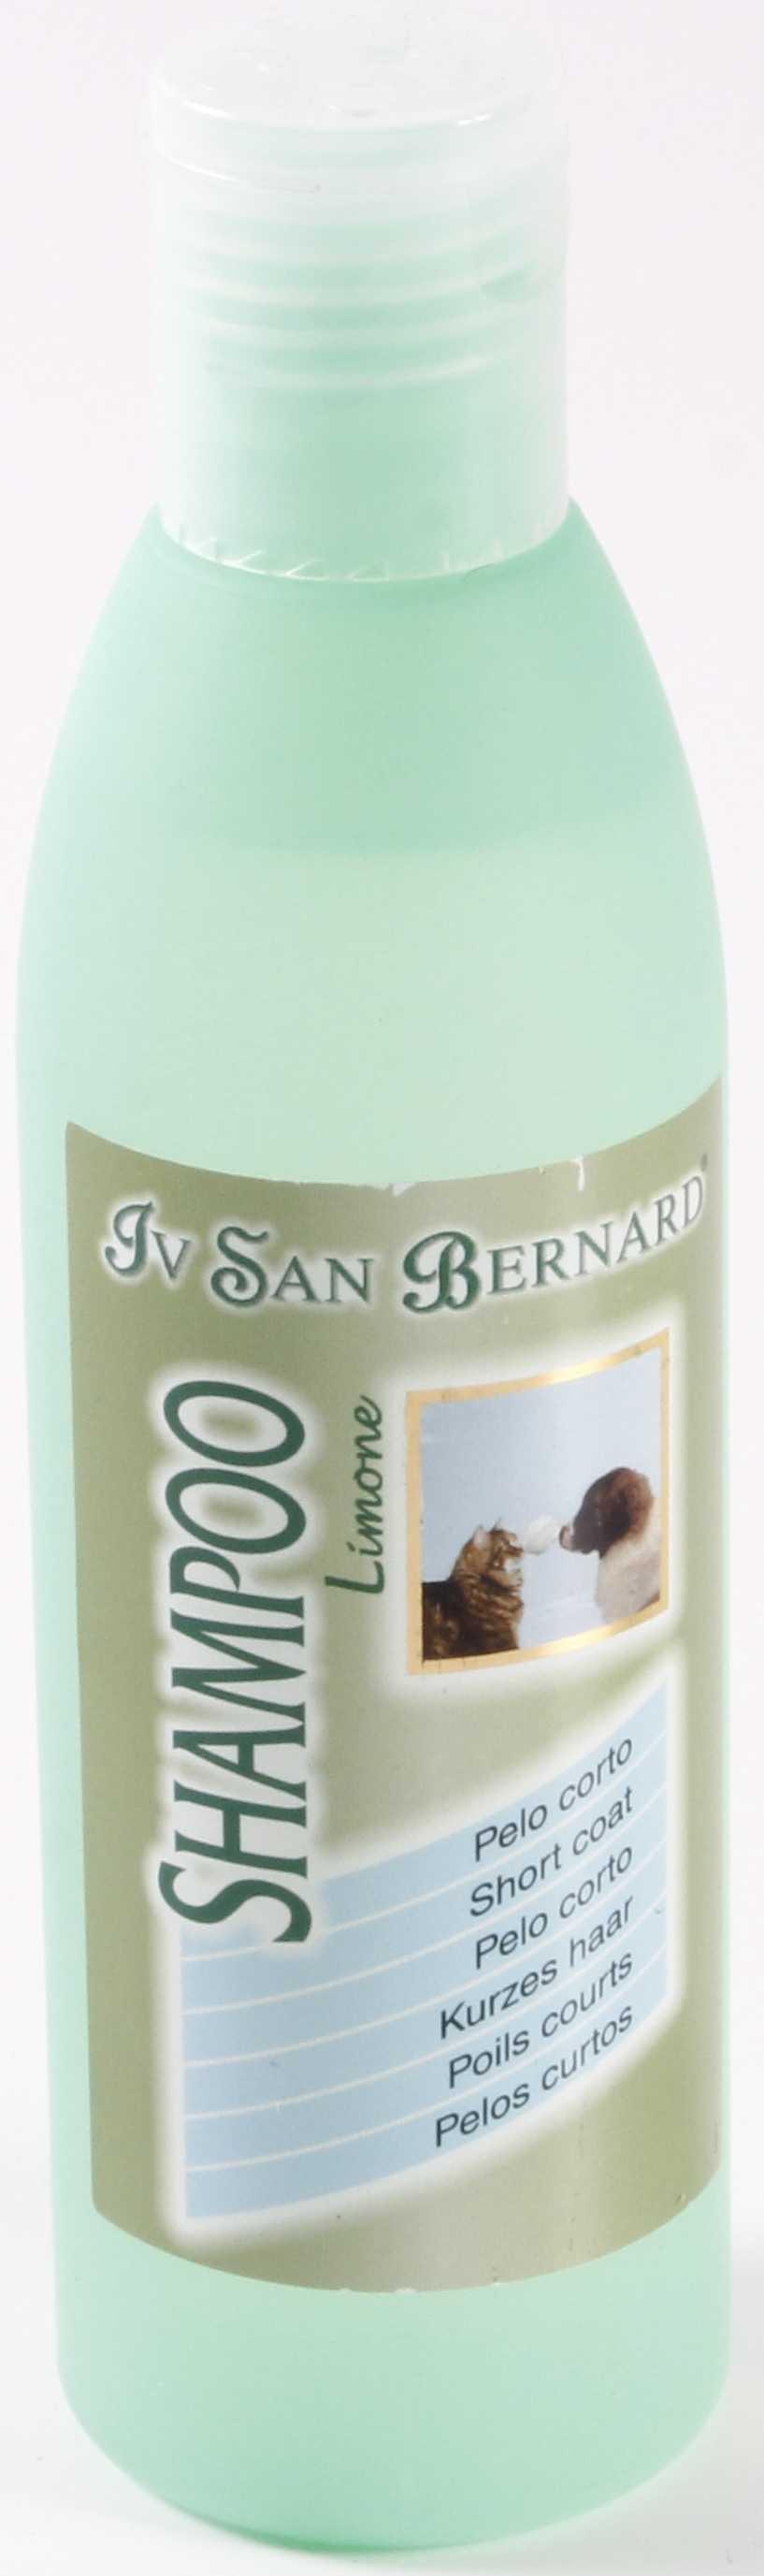 Iv San Bernard Shampoo "Limone" - Шампунь для собак и кошек с короткой шерстью "Лимон"